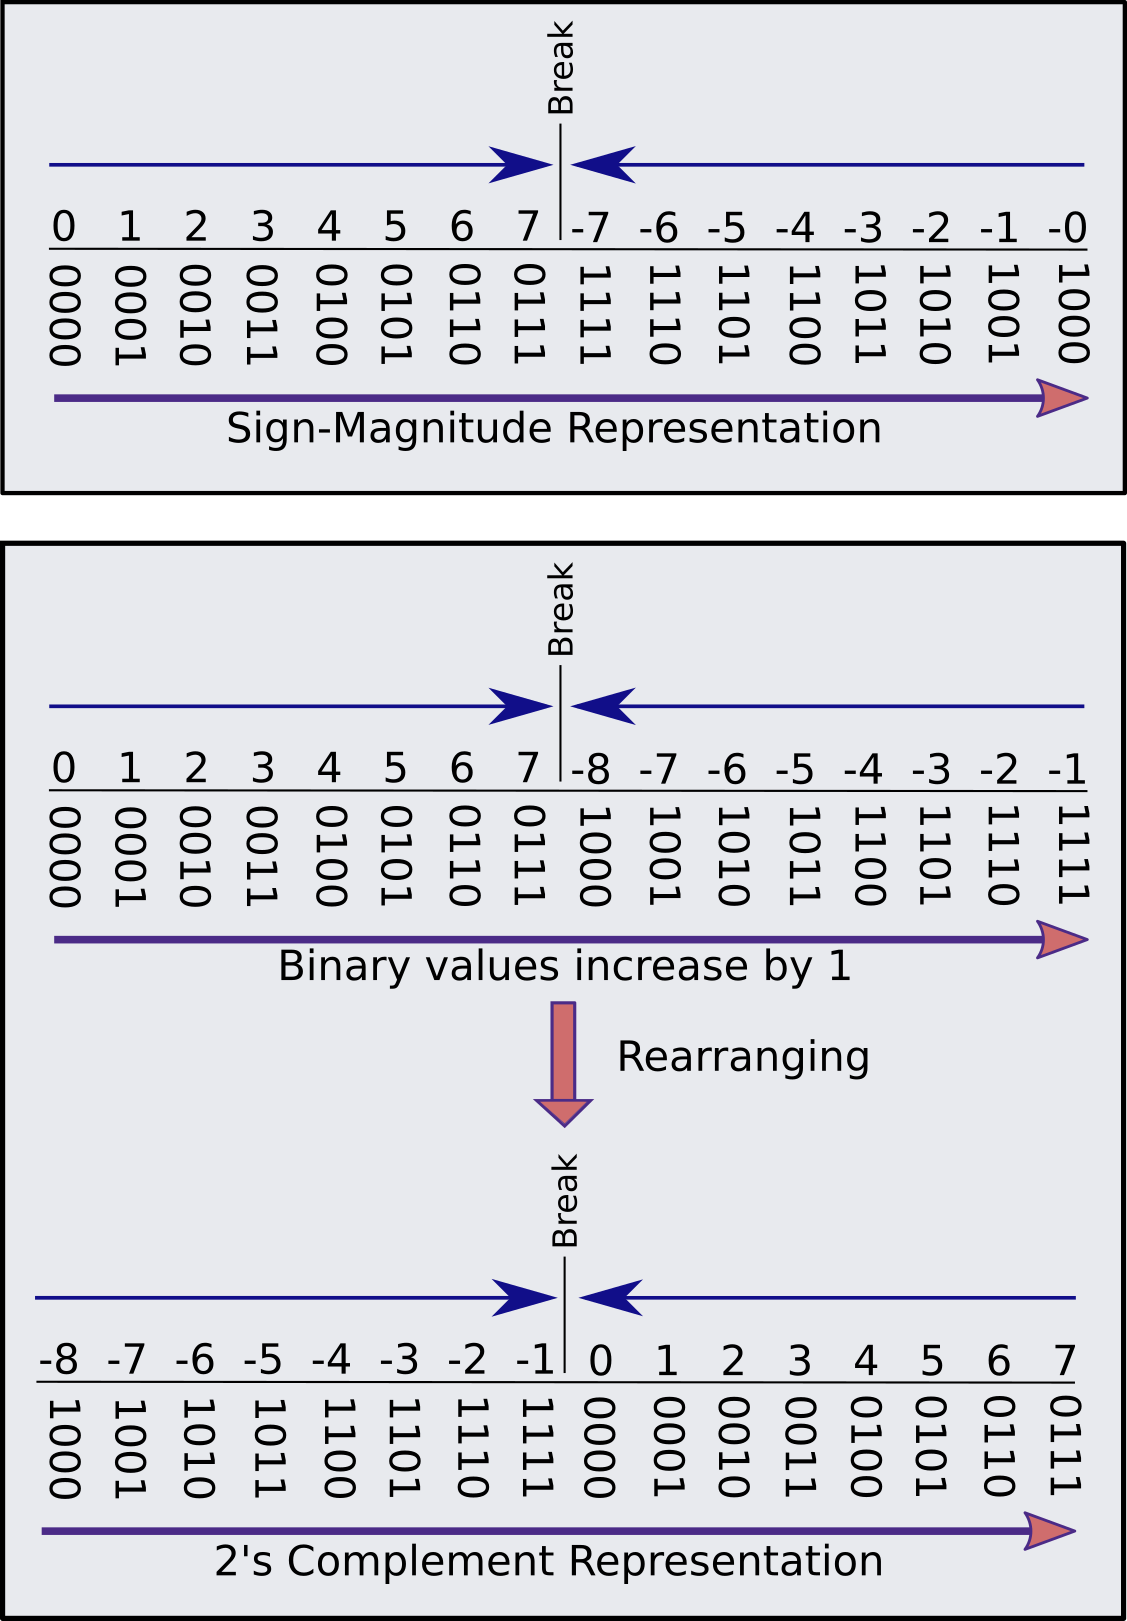 Representation schemes of Sign-Magnitude Representation and 2's Complement Representation